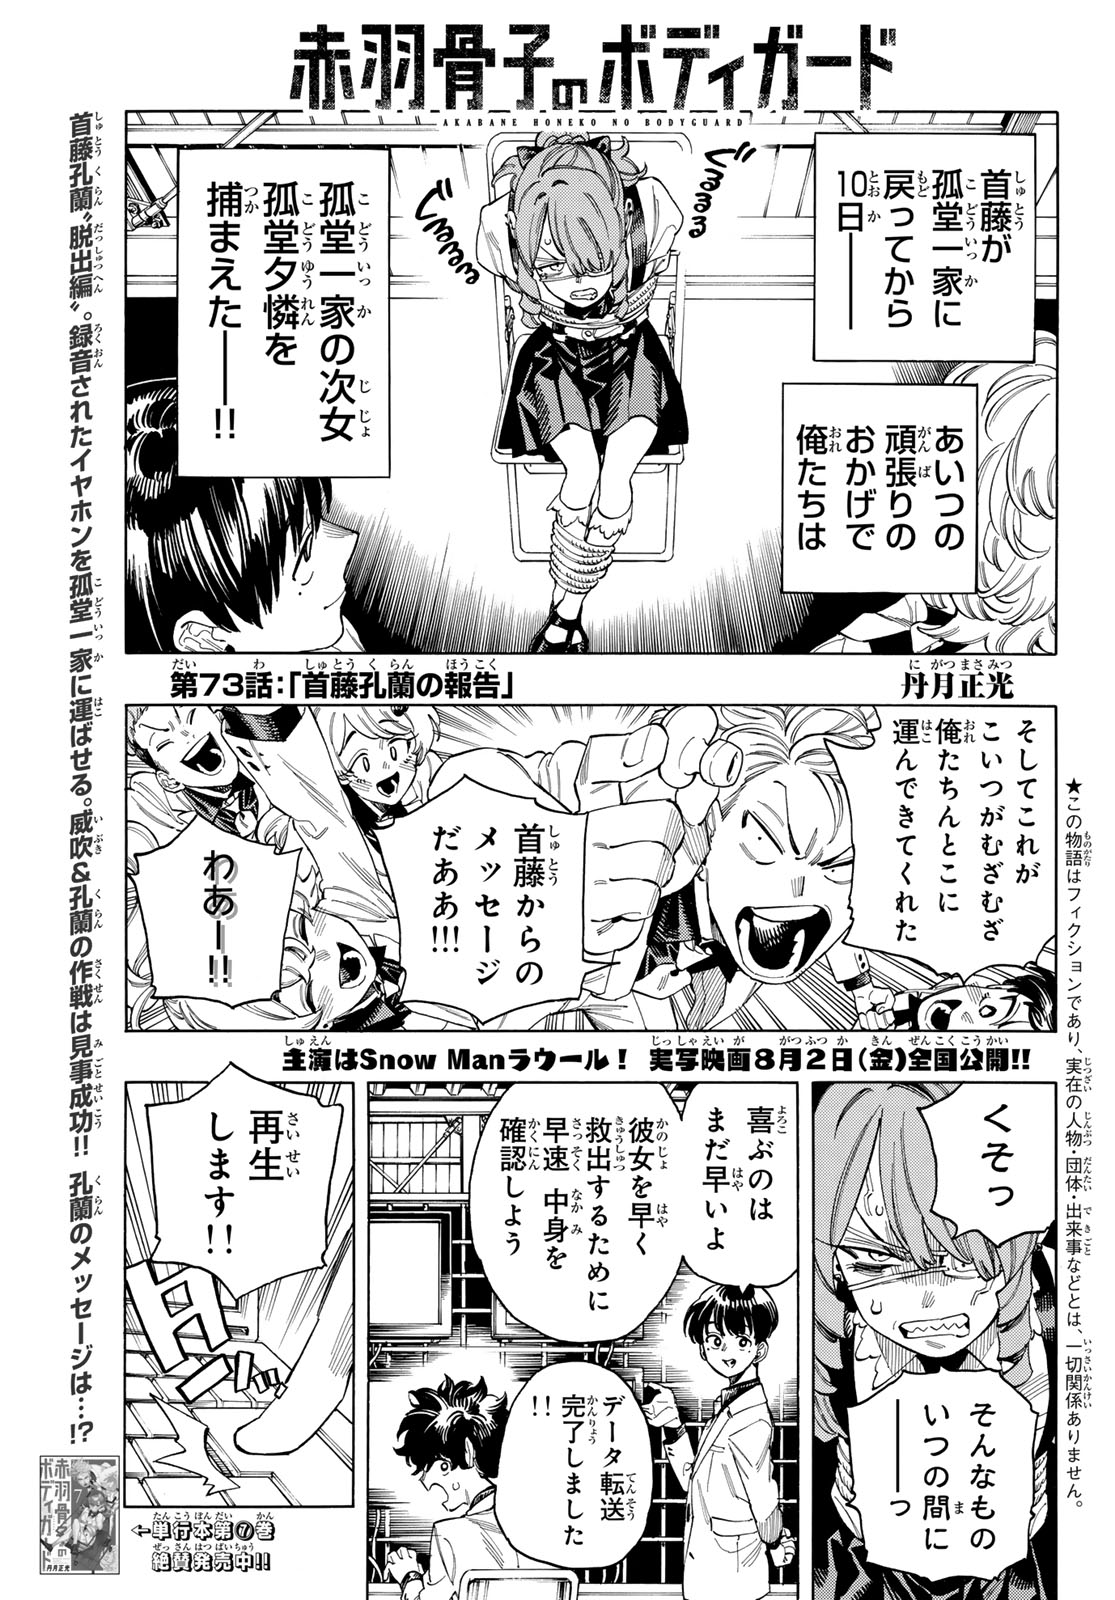 Akabane Honeko no Bodyguard - Chapter 73 - Page 1